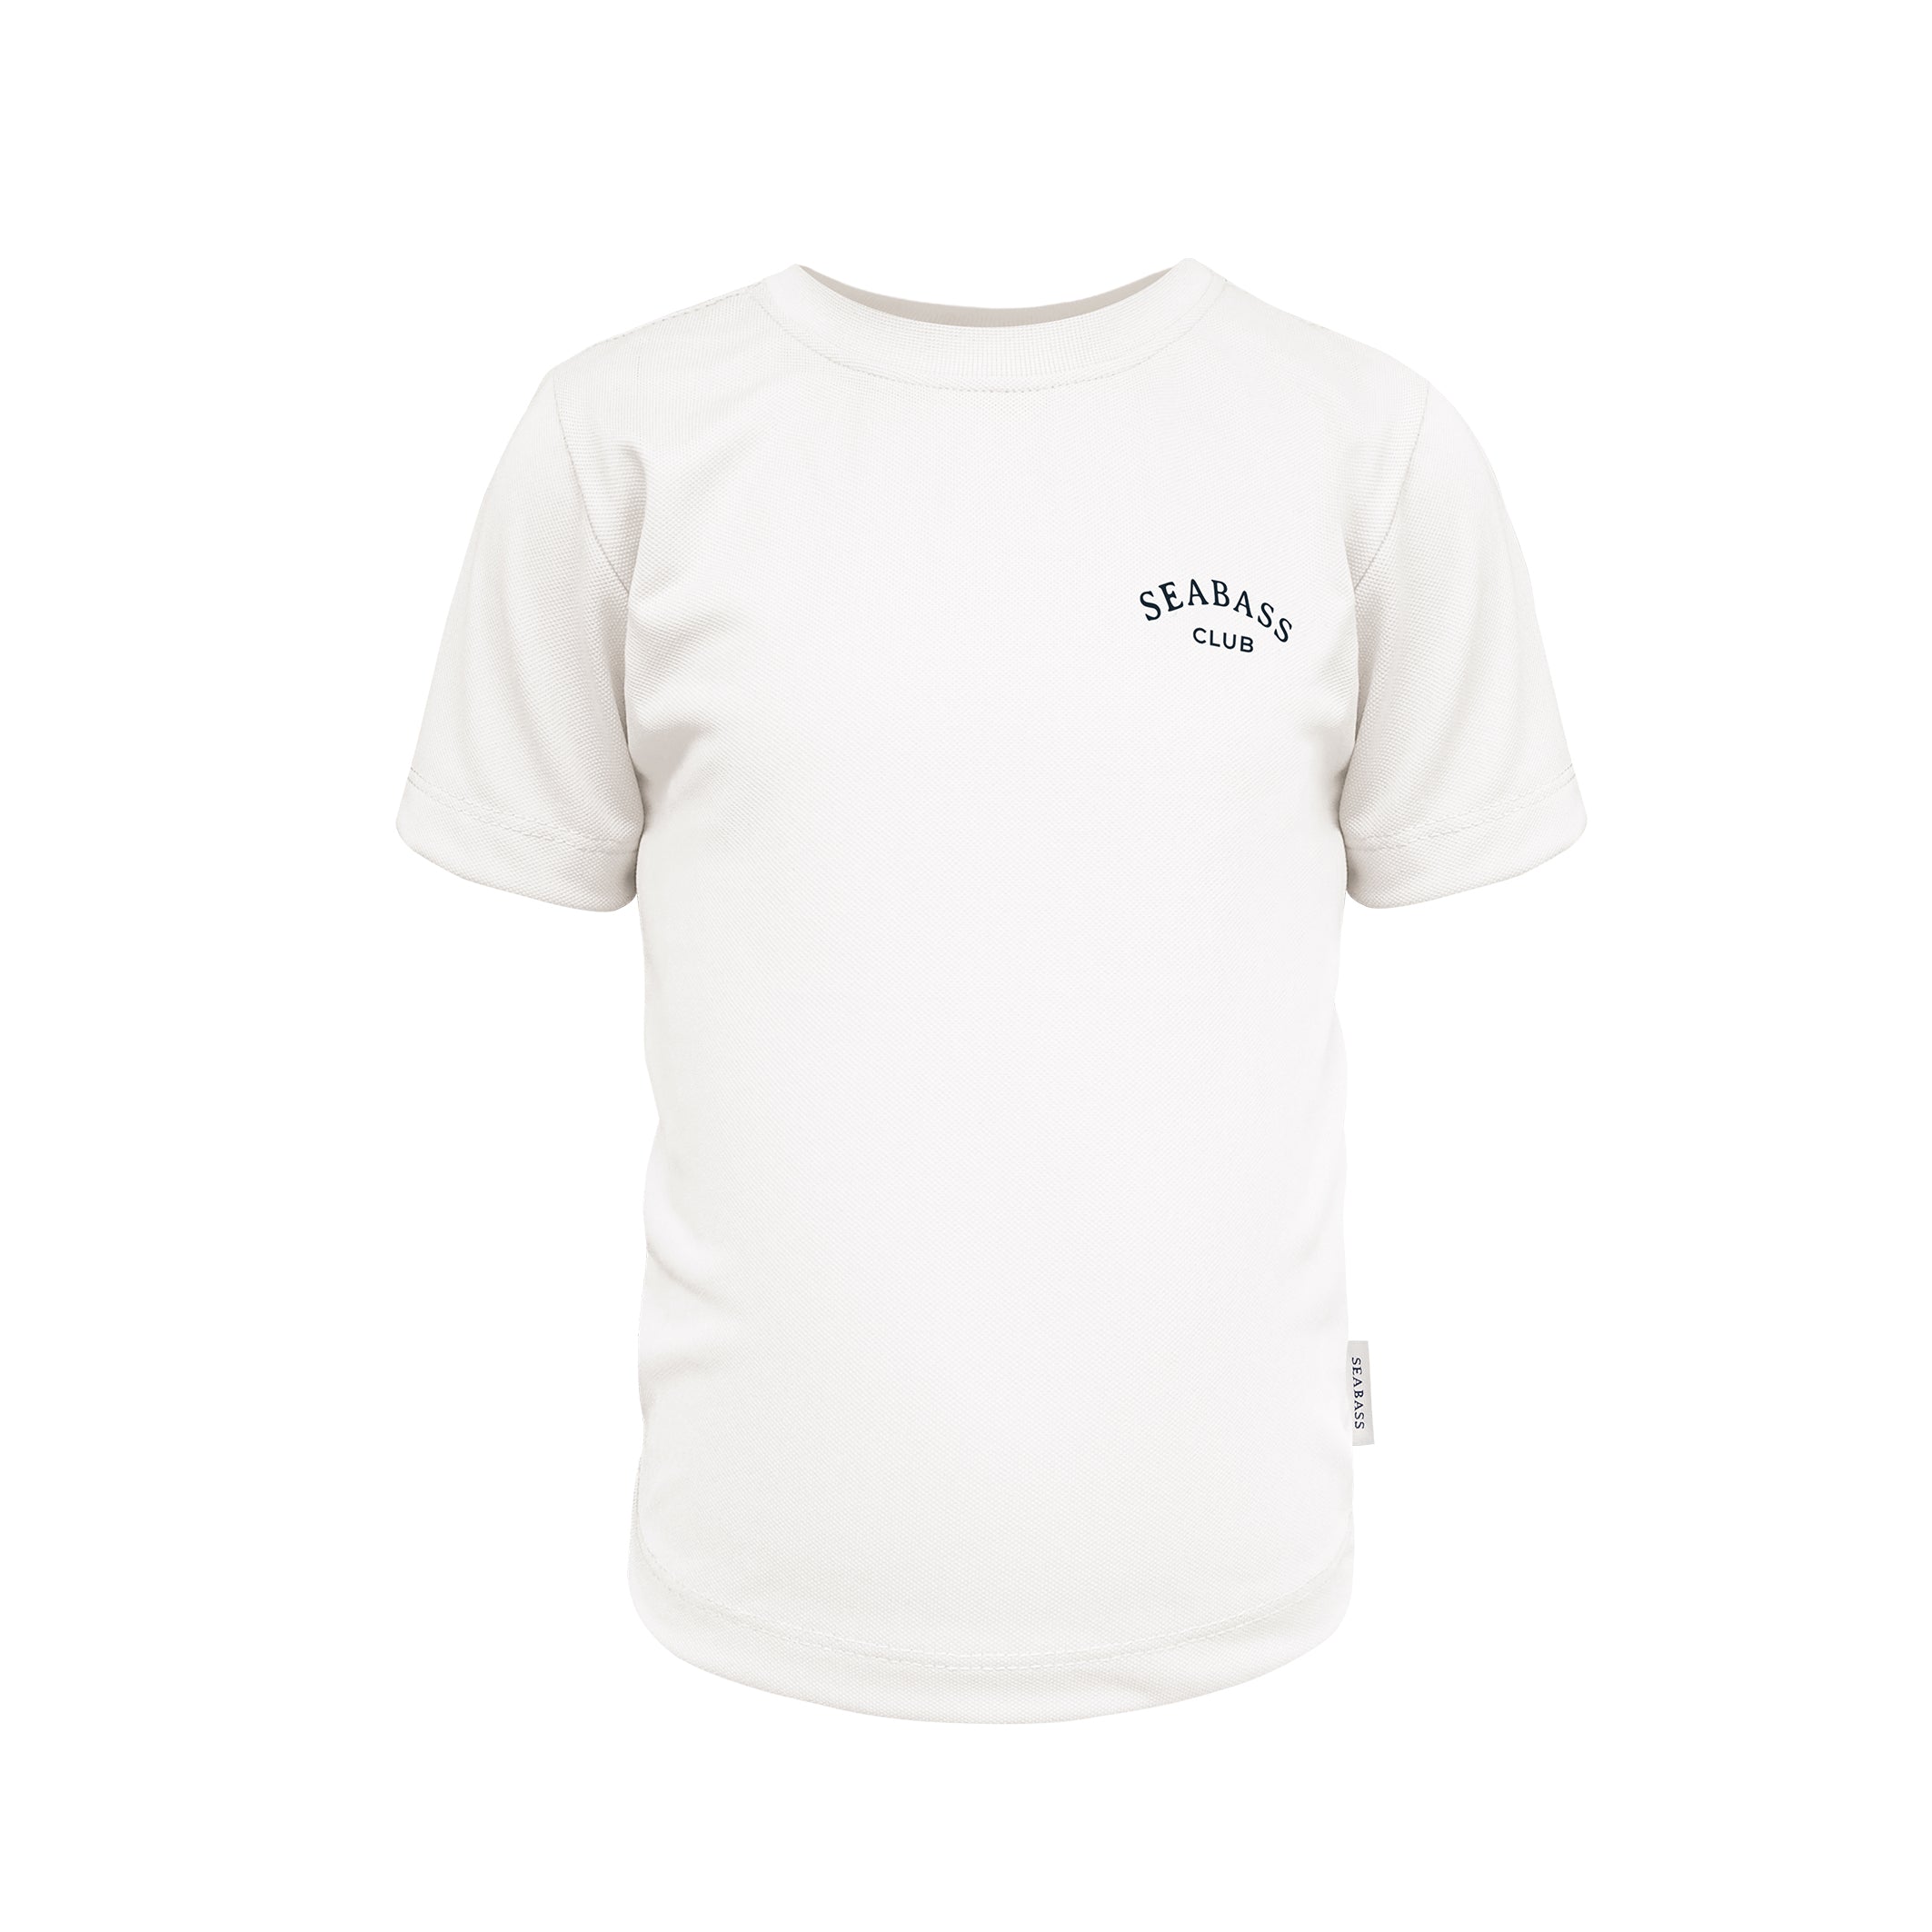 UV Zwem Set - Zwembroek Portofino en T-Shirt Wit